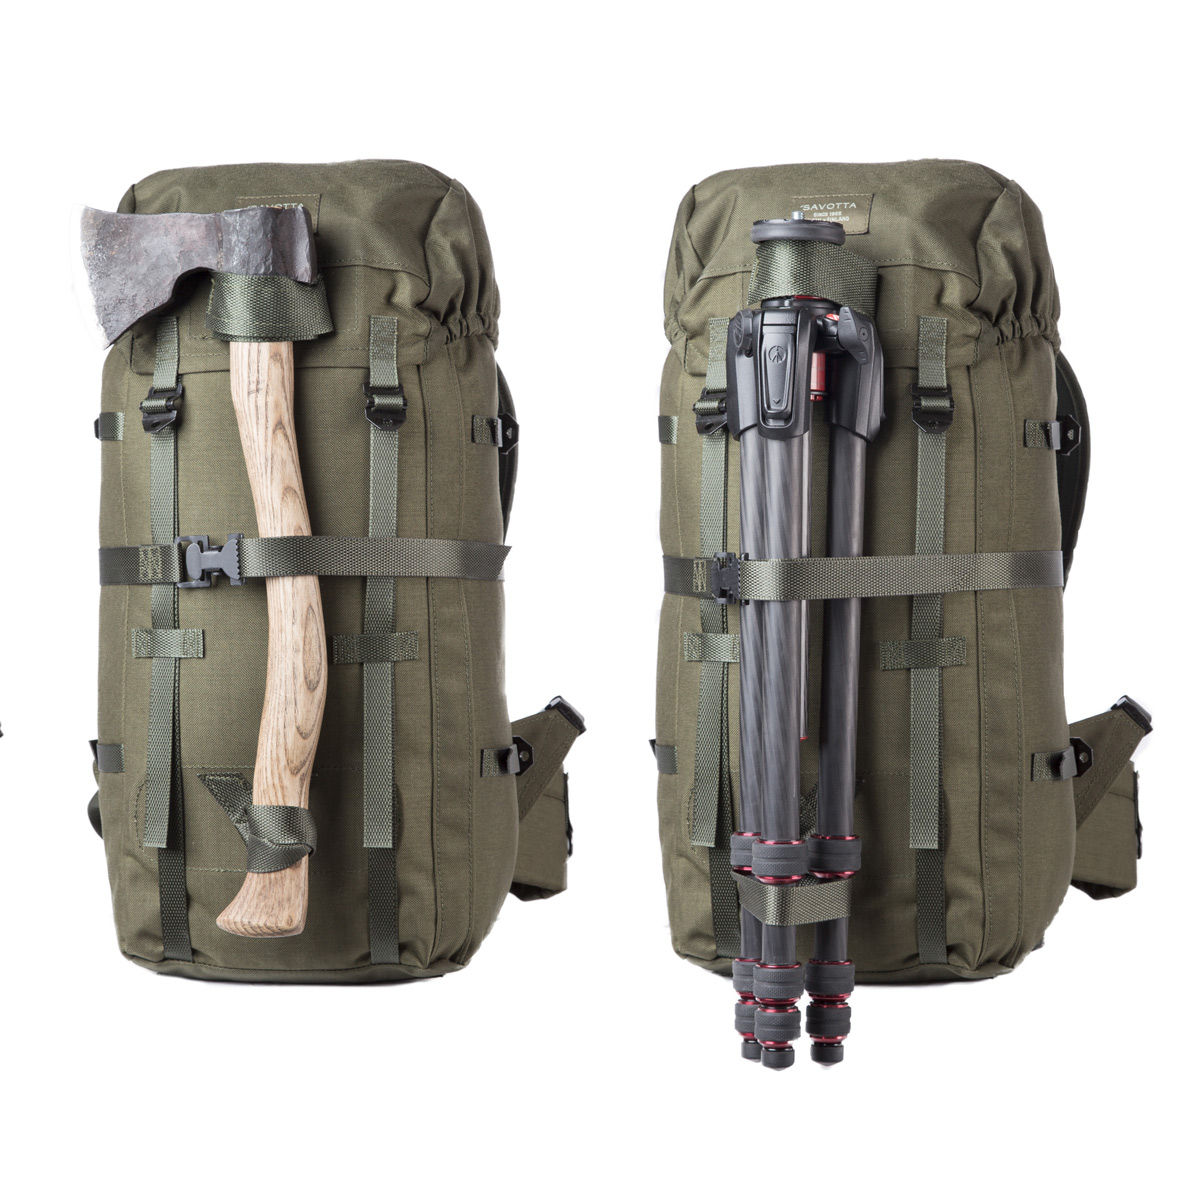 Savotta Light Border Patrol 25 litre Backpack - Olive Green